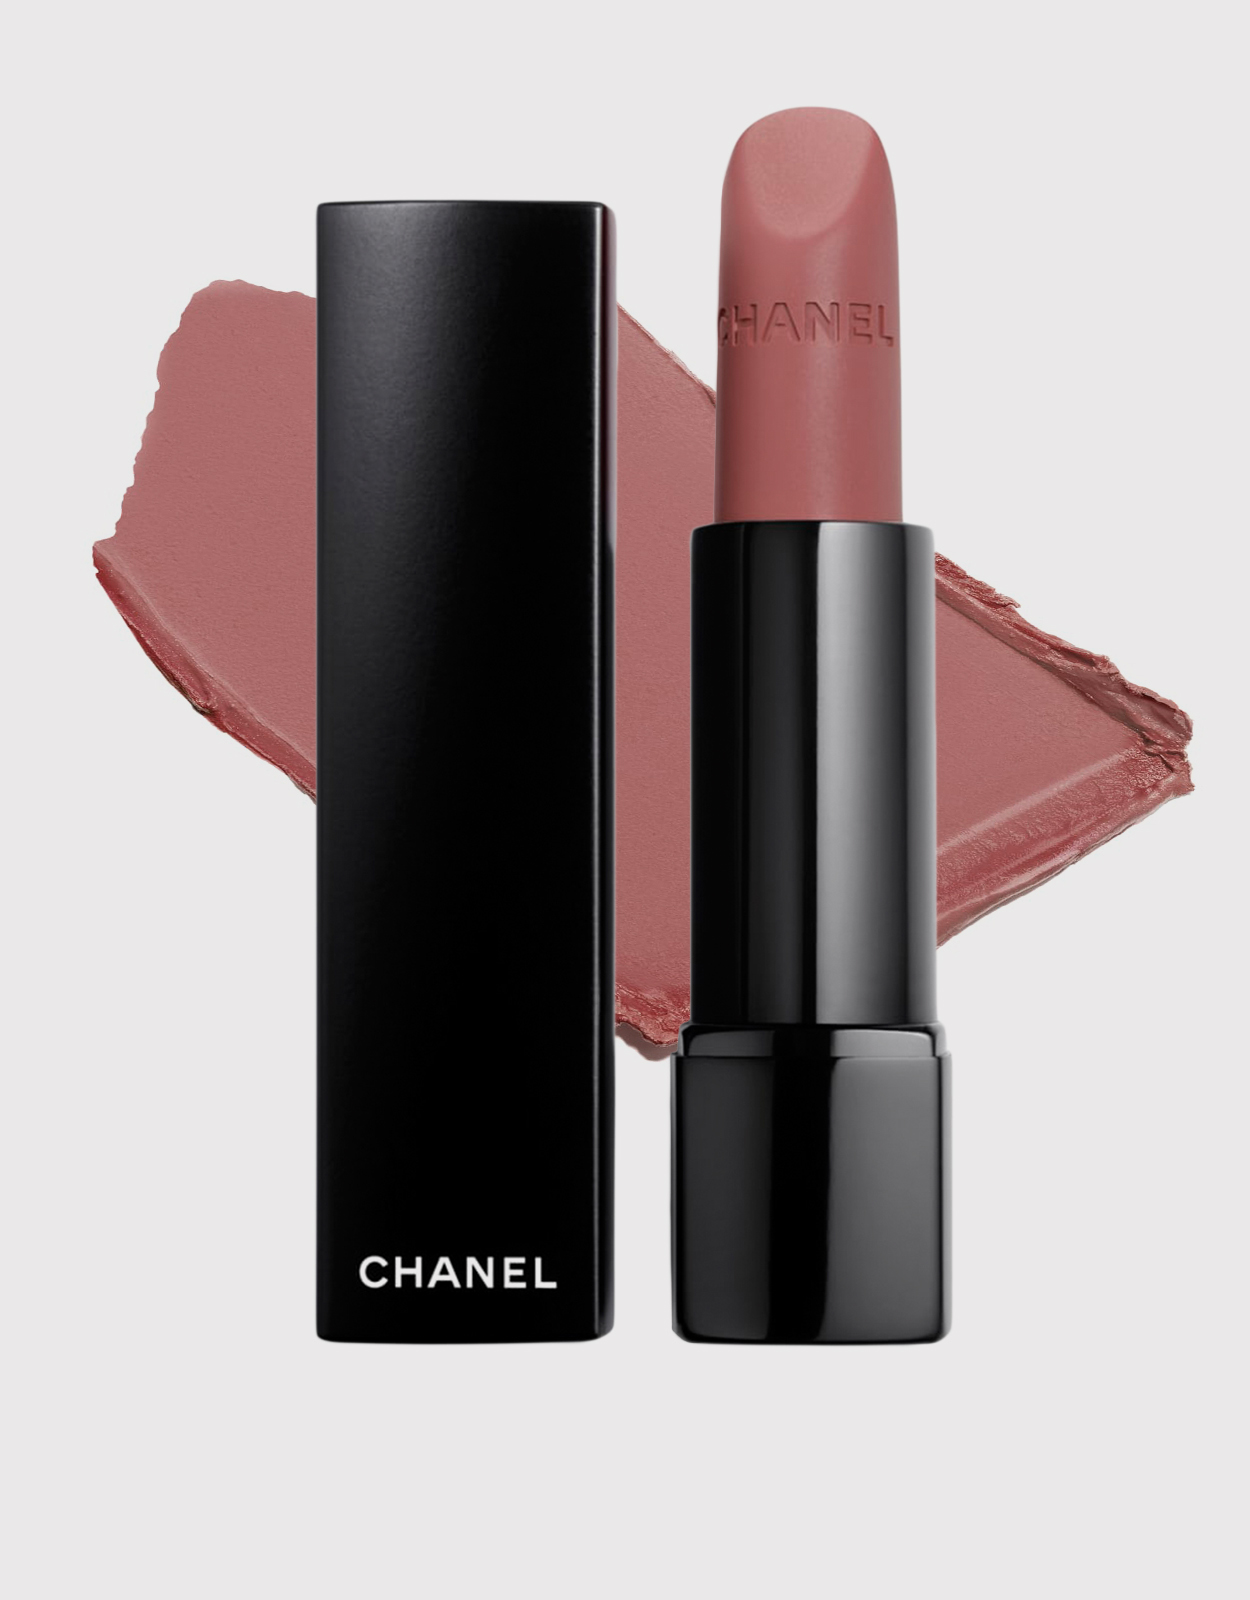 Chanel Beauty Rouge Allure Velvet Extreme-118 Eternel (Makeup,Lip,Lipstick)  